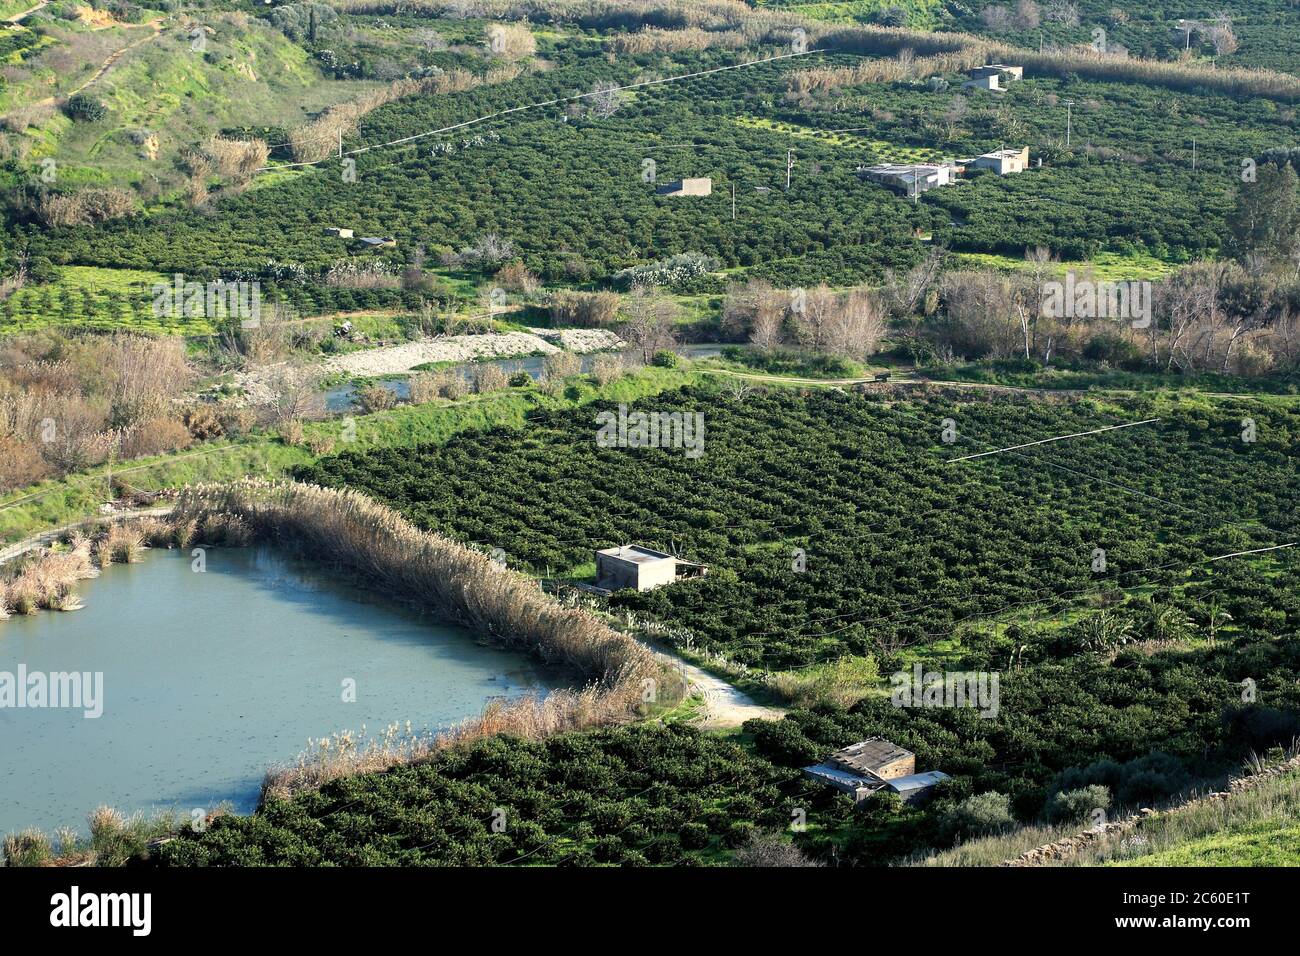 Washington Navel orange cultivation in the Ribera area in Sicily. Stock Photo